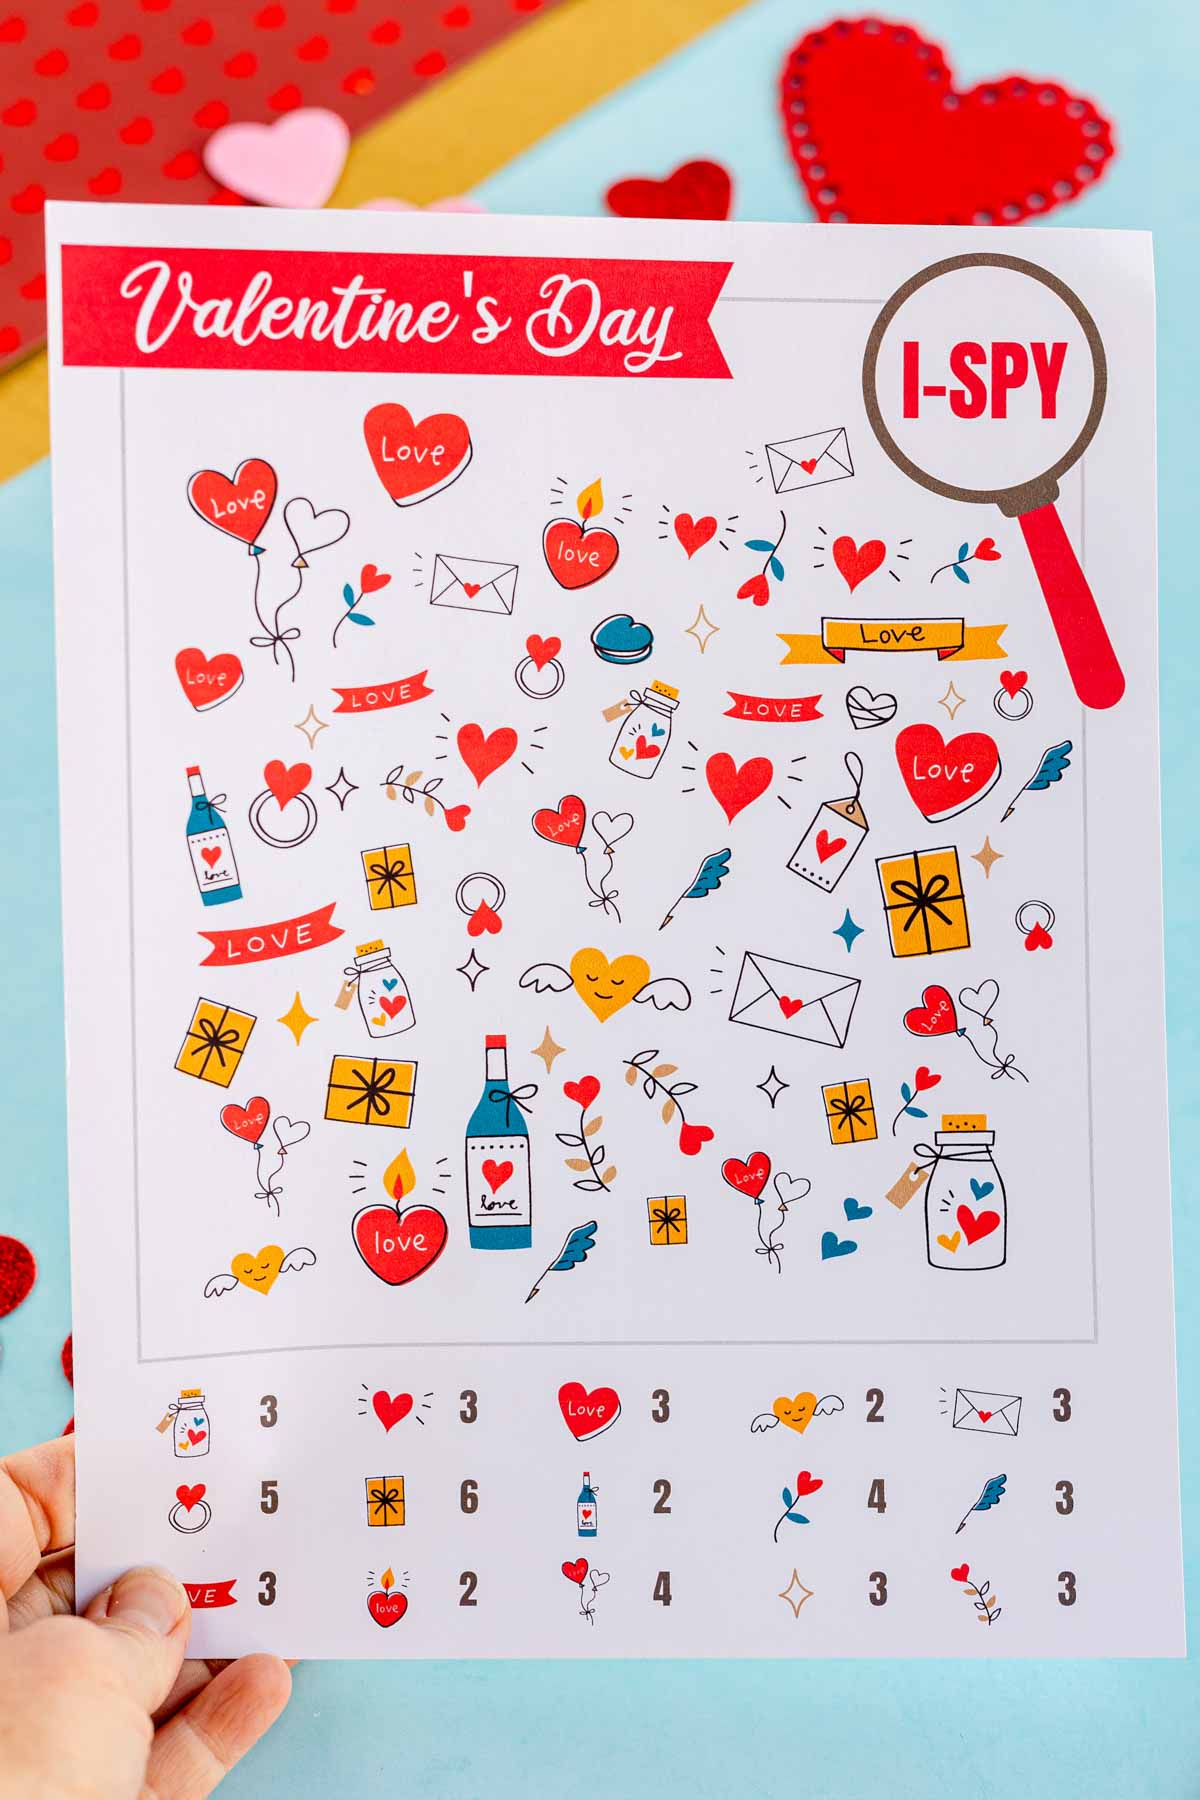 Valentine i spy sheet in someone's hand